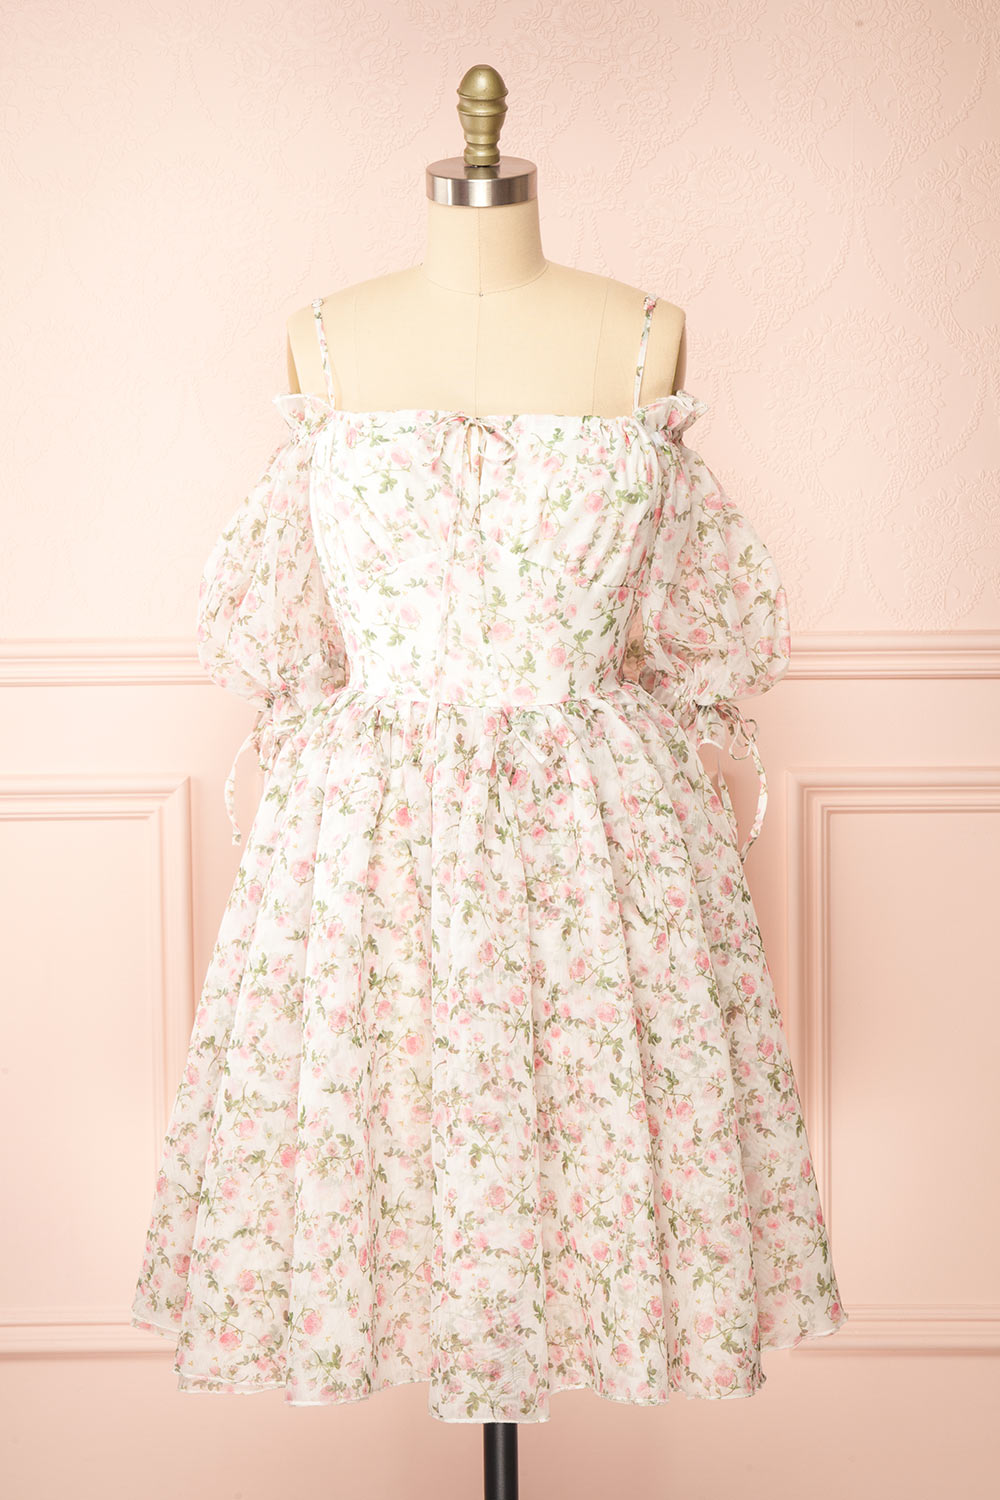 Auroraa Off-Shoulder Short Floral Dress | Boutique 1861 front view